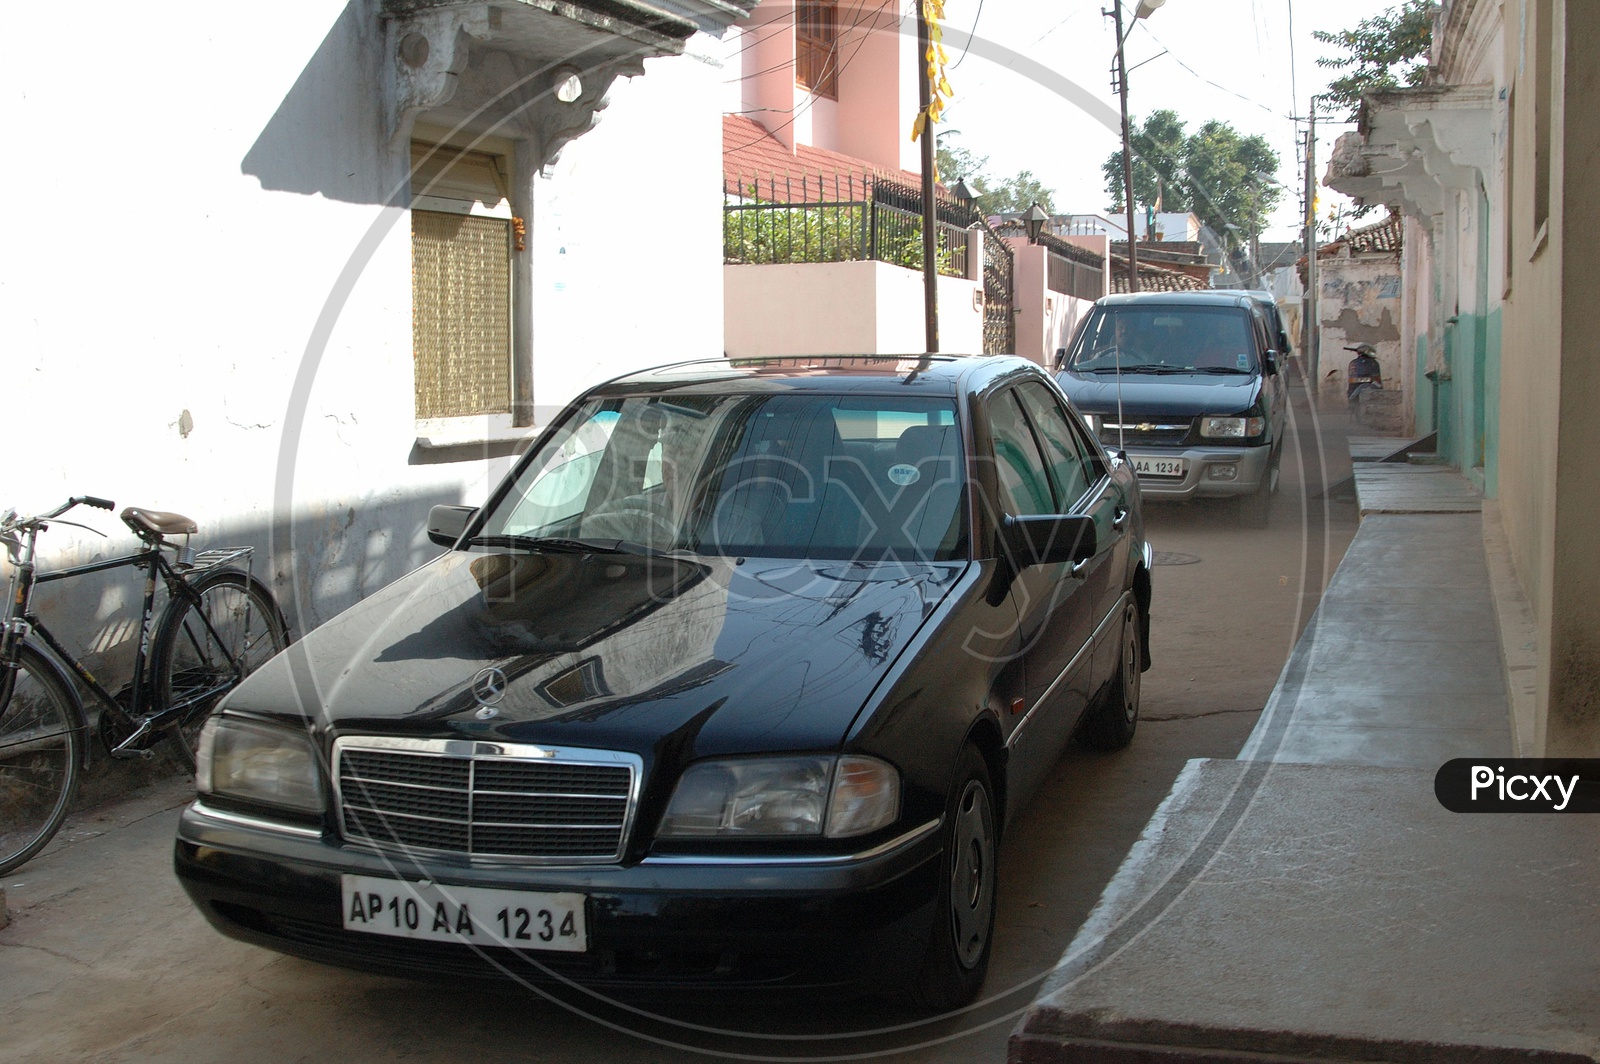 Benz Car In  Rural Village Streets